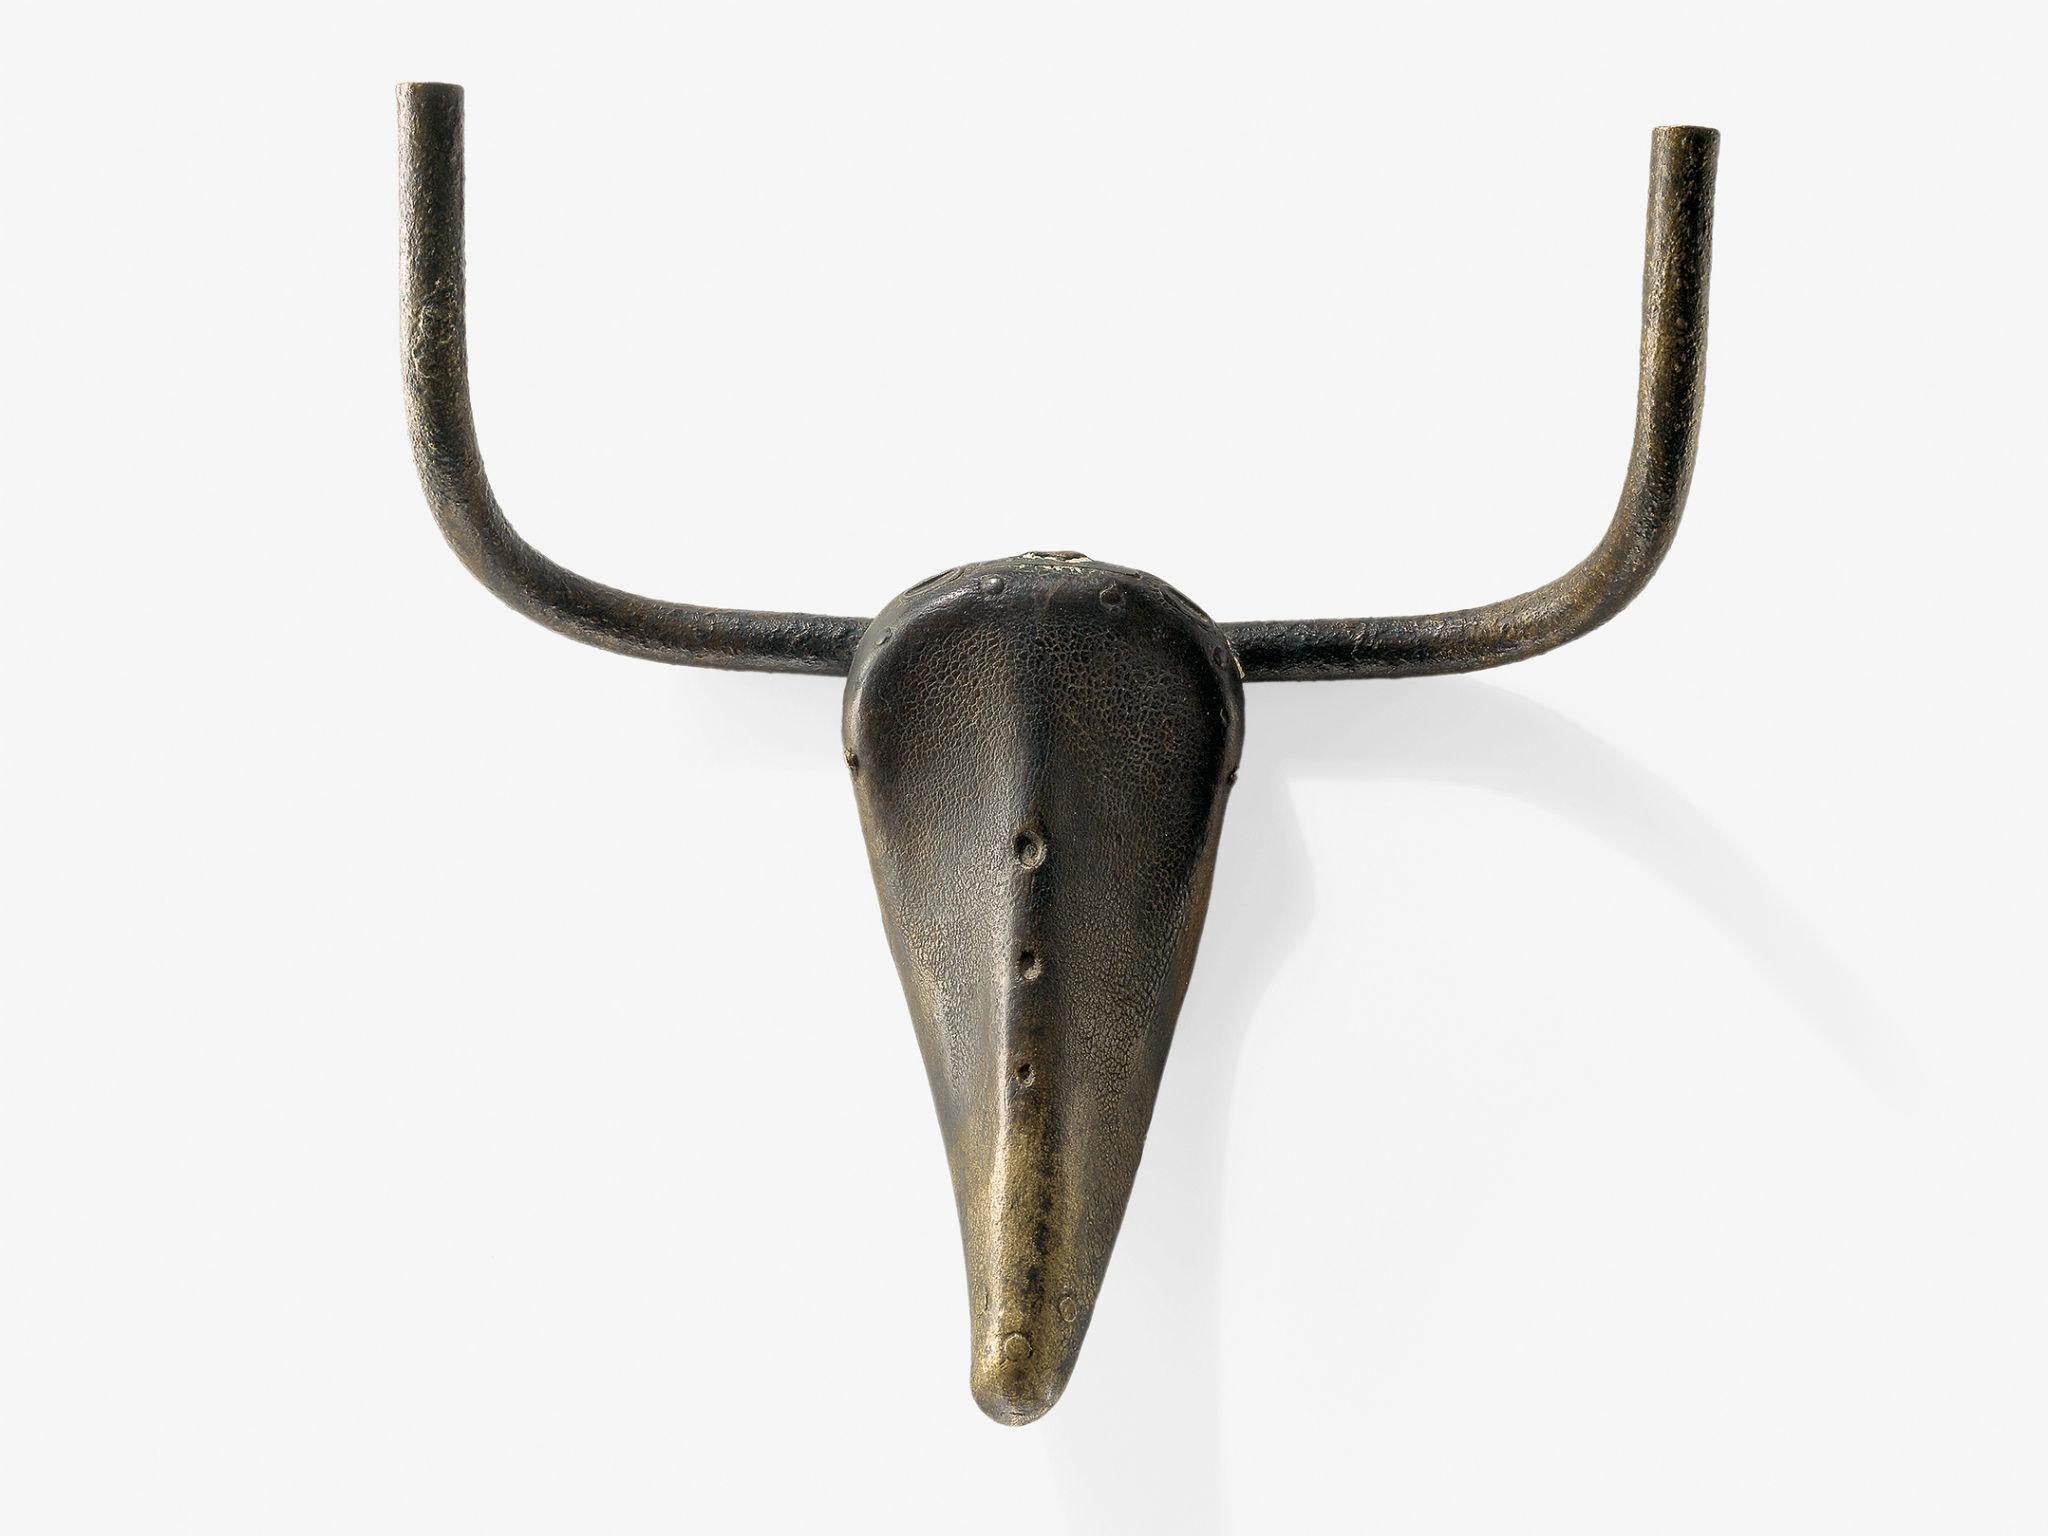 The Spanish artist’s bronze 1942 work ‘Tête de taureau’ is featured in the display